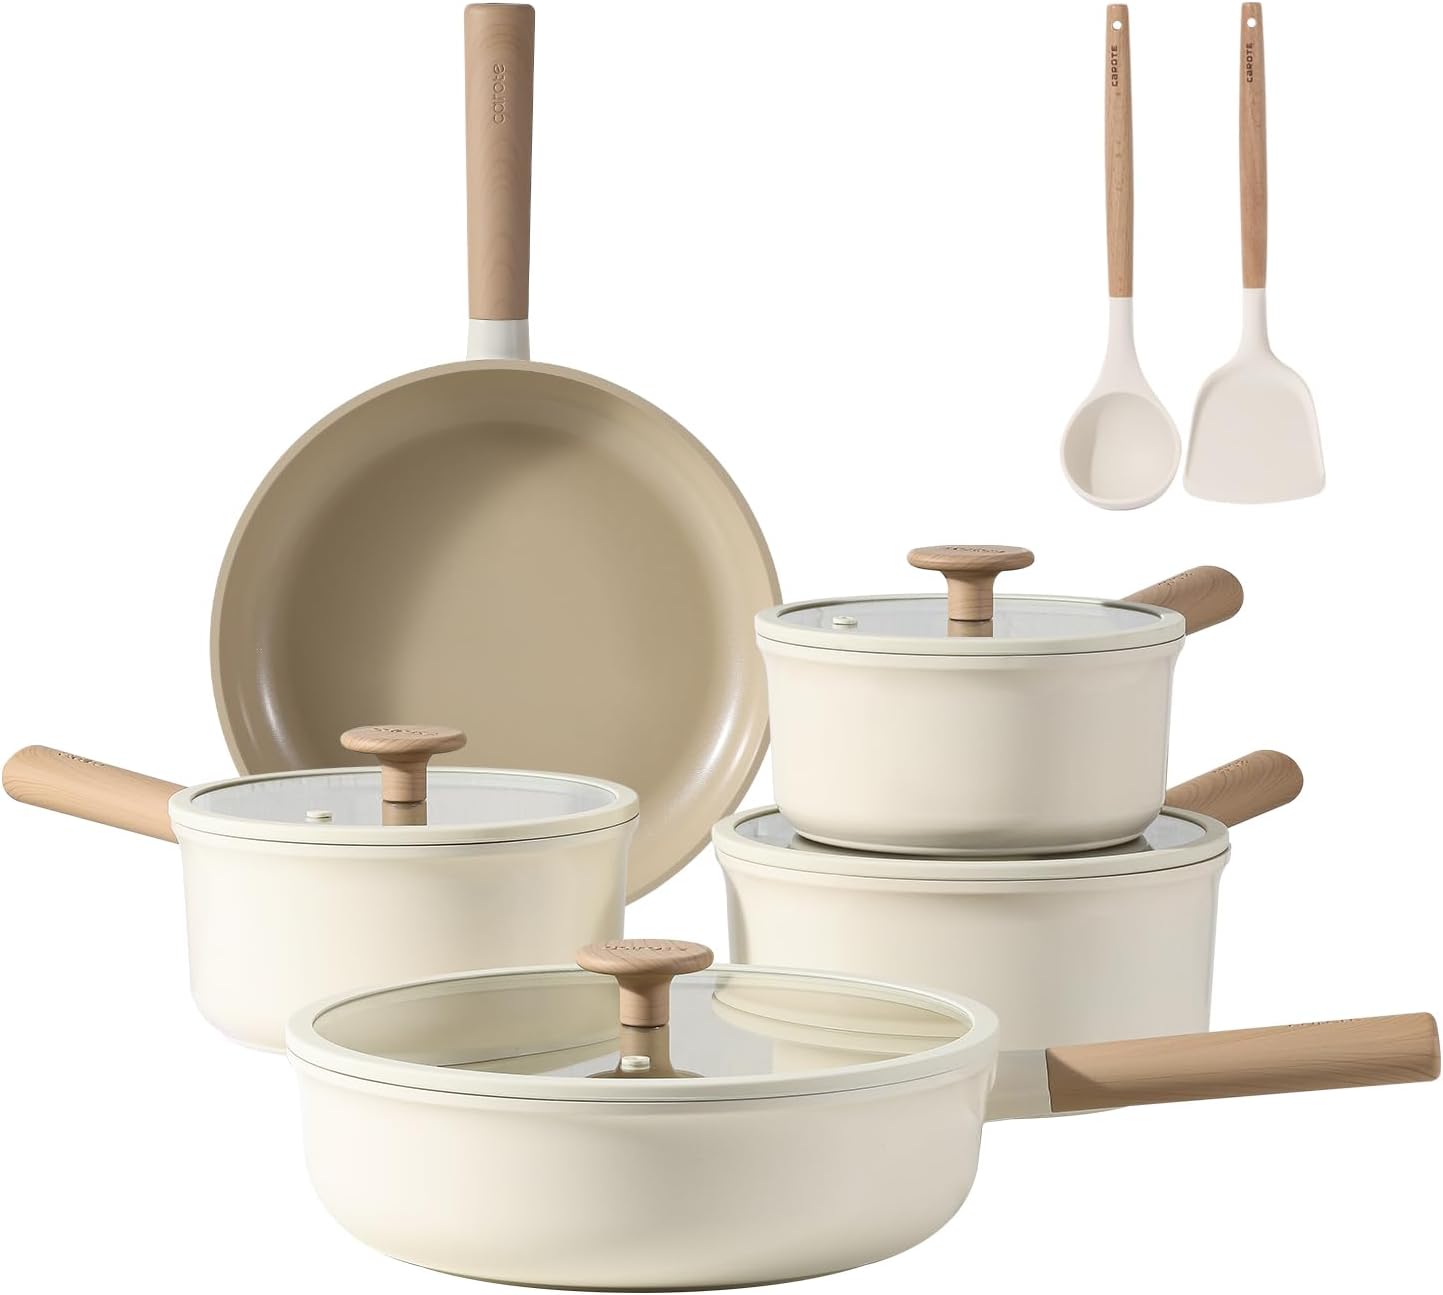 Ceramic Cookware Sets